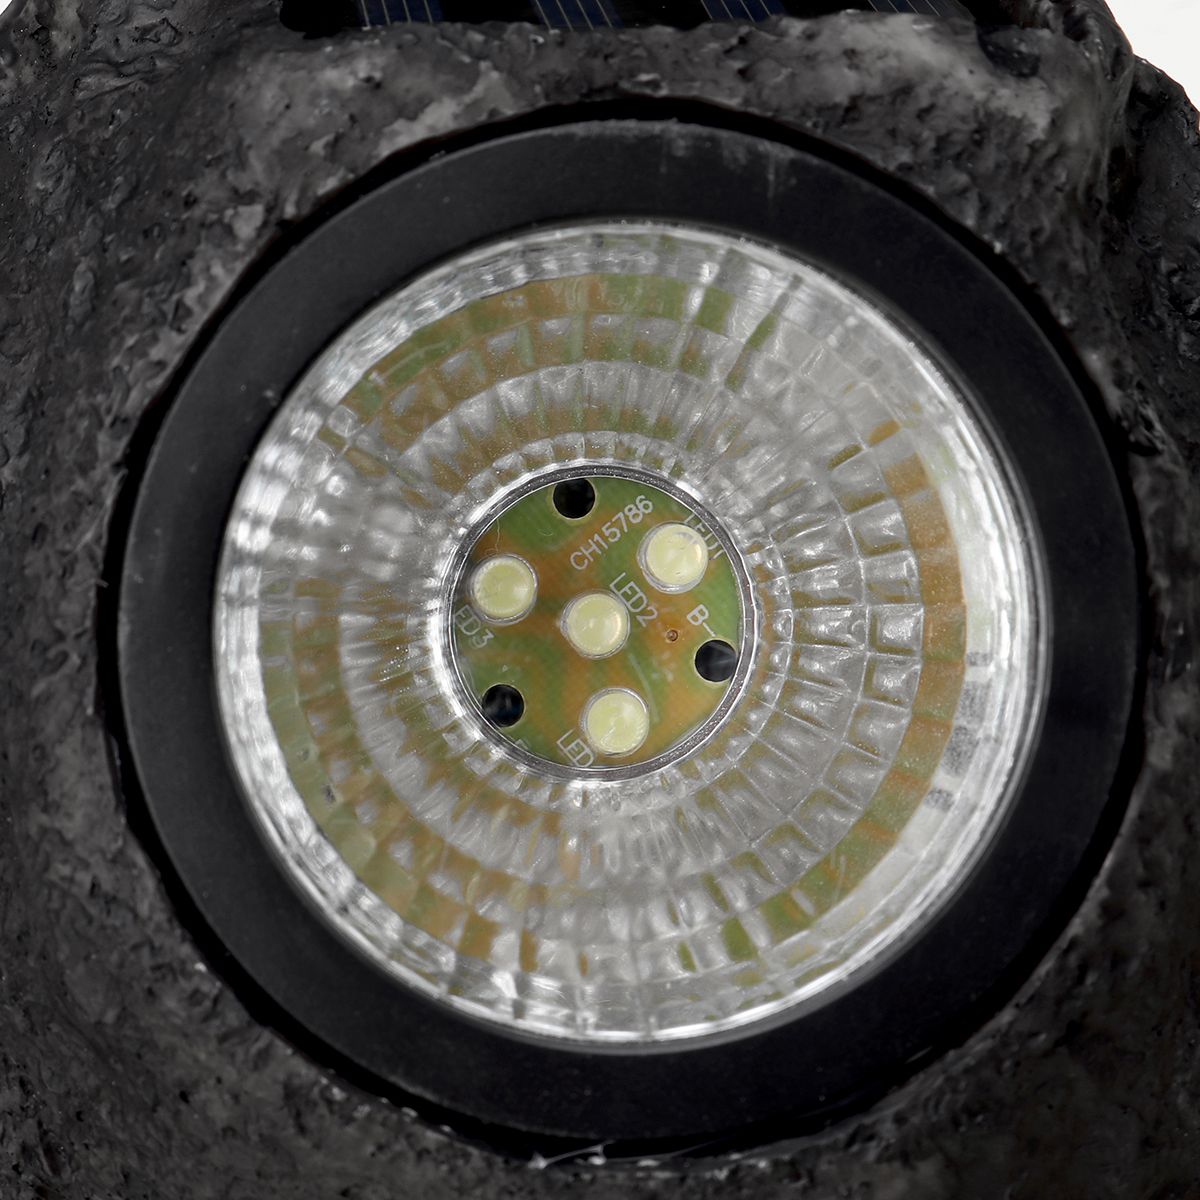 Solar-Powered-LED-Rock-Light-Waterproof-Stone-Spot-Lamp-Garden-Spotlight-Outdoor-Lighting-1730792